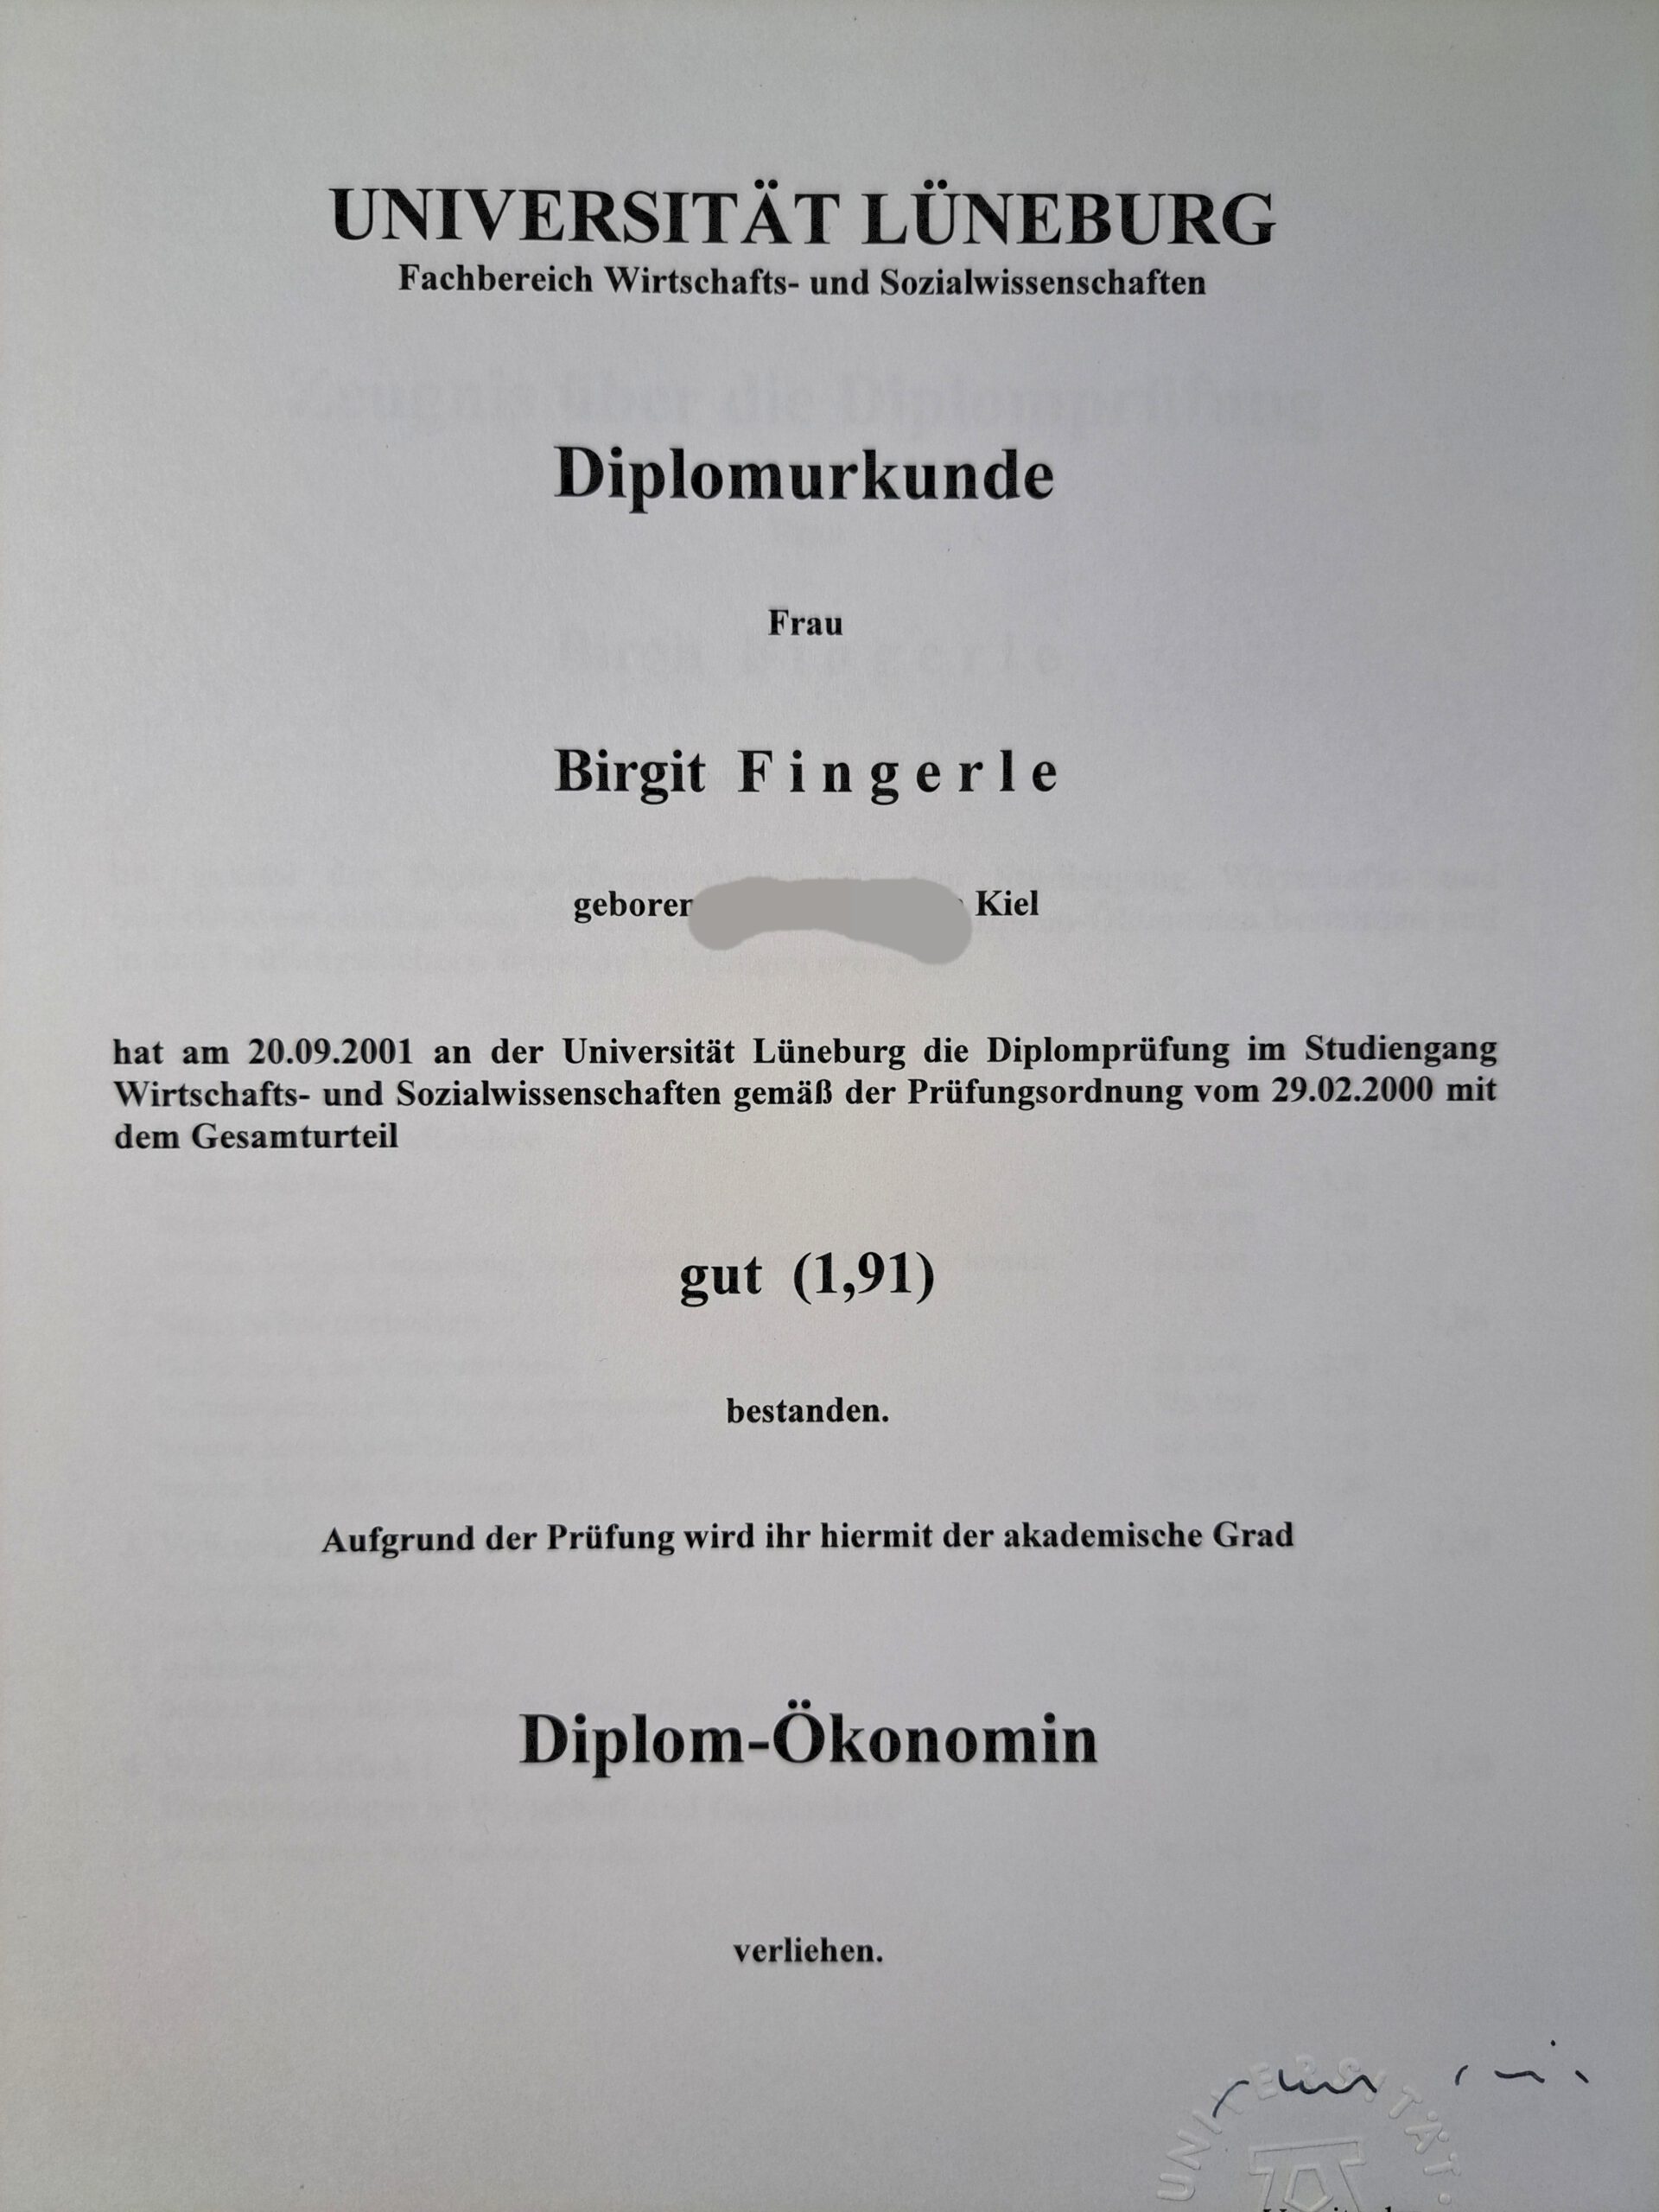 Diplom-Urkunde für das abgeschlossene Studium zur Diplom-Ökonomin